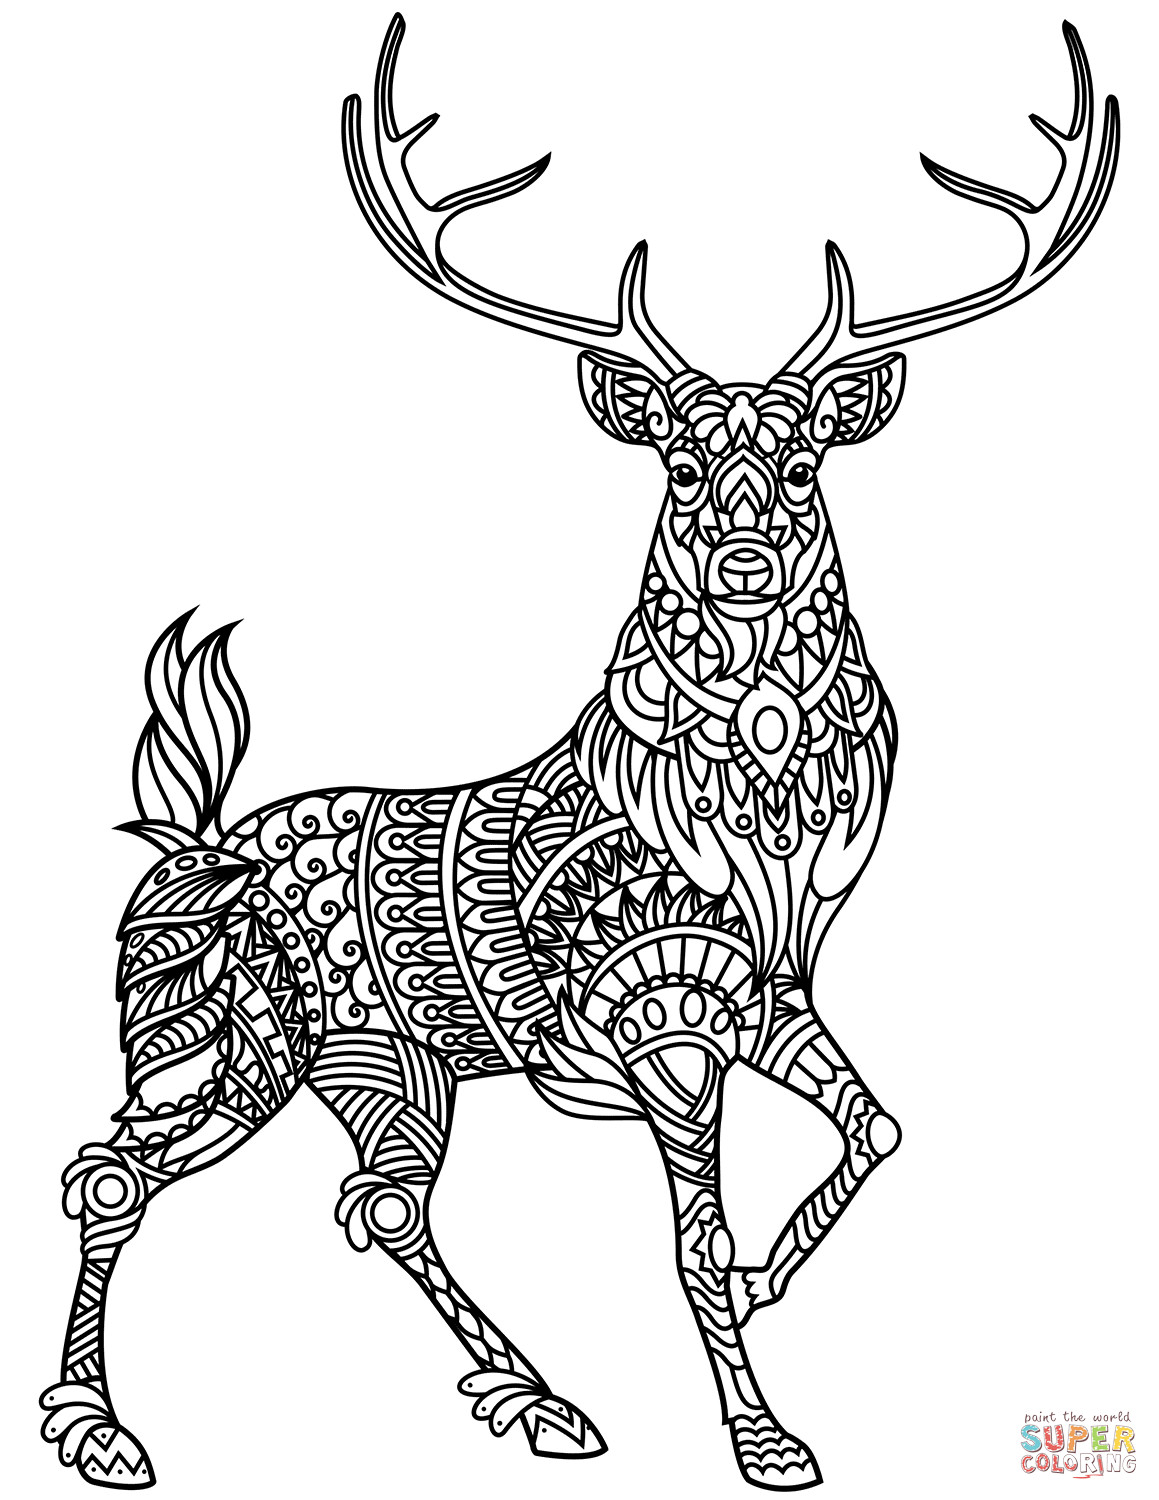 Printable Deer Coloring Pages
 Deer Zentangle coloring page